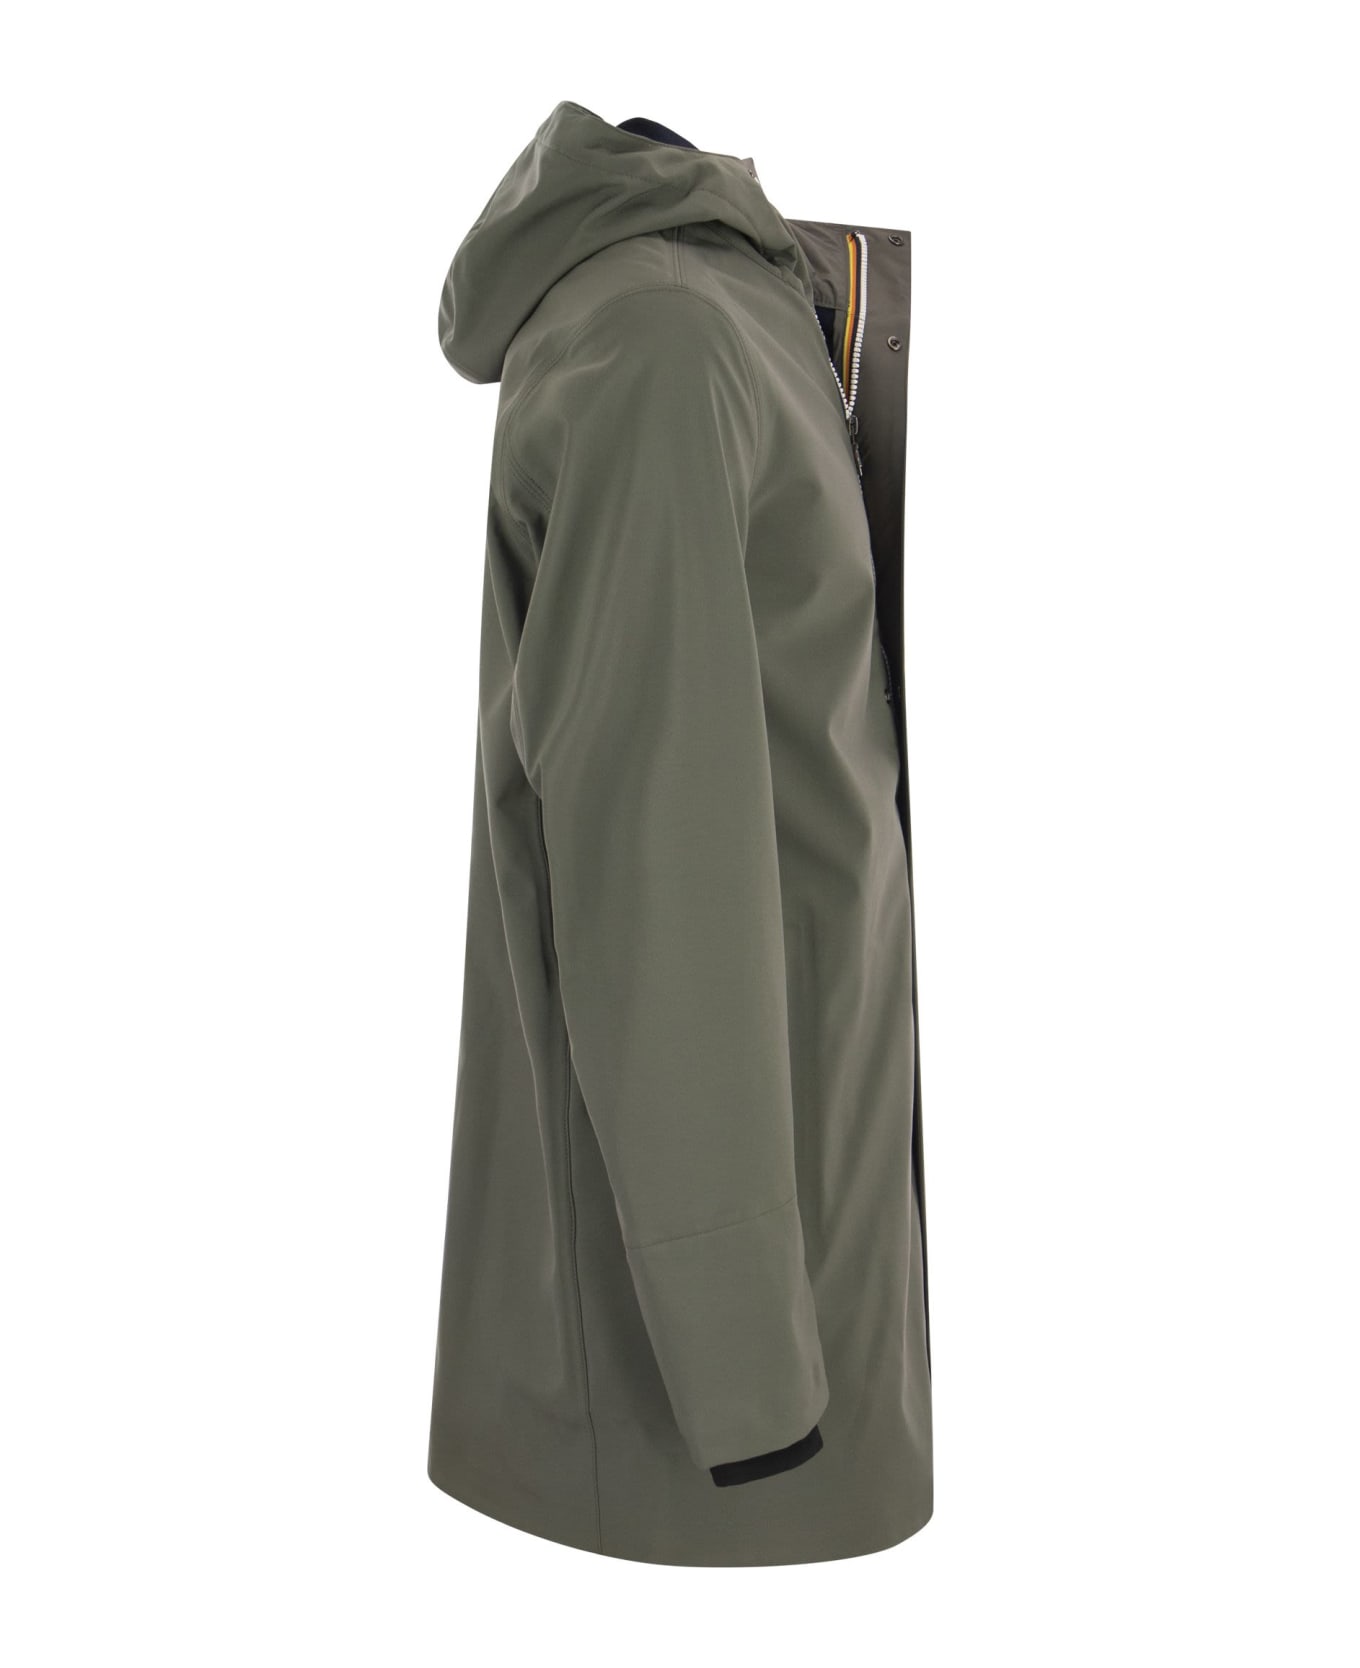 K-Way Marlyn Bonded - Hooded Jacket - Military Green レインコート